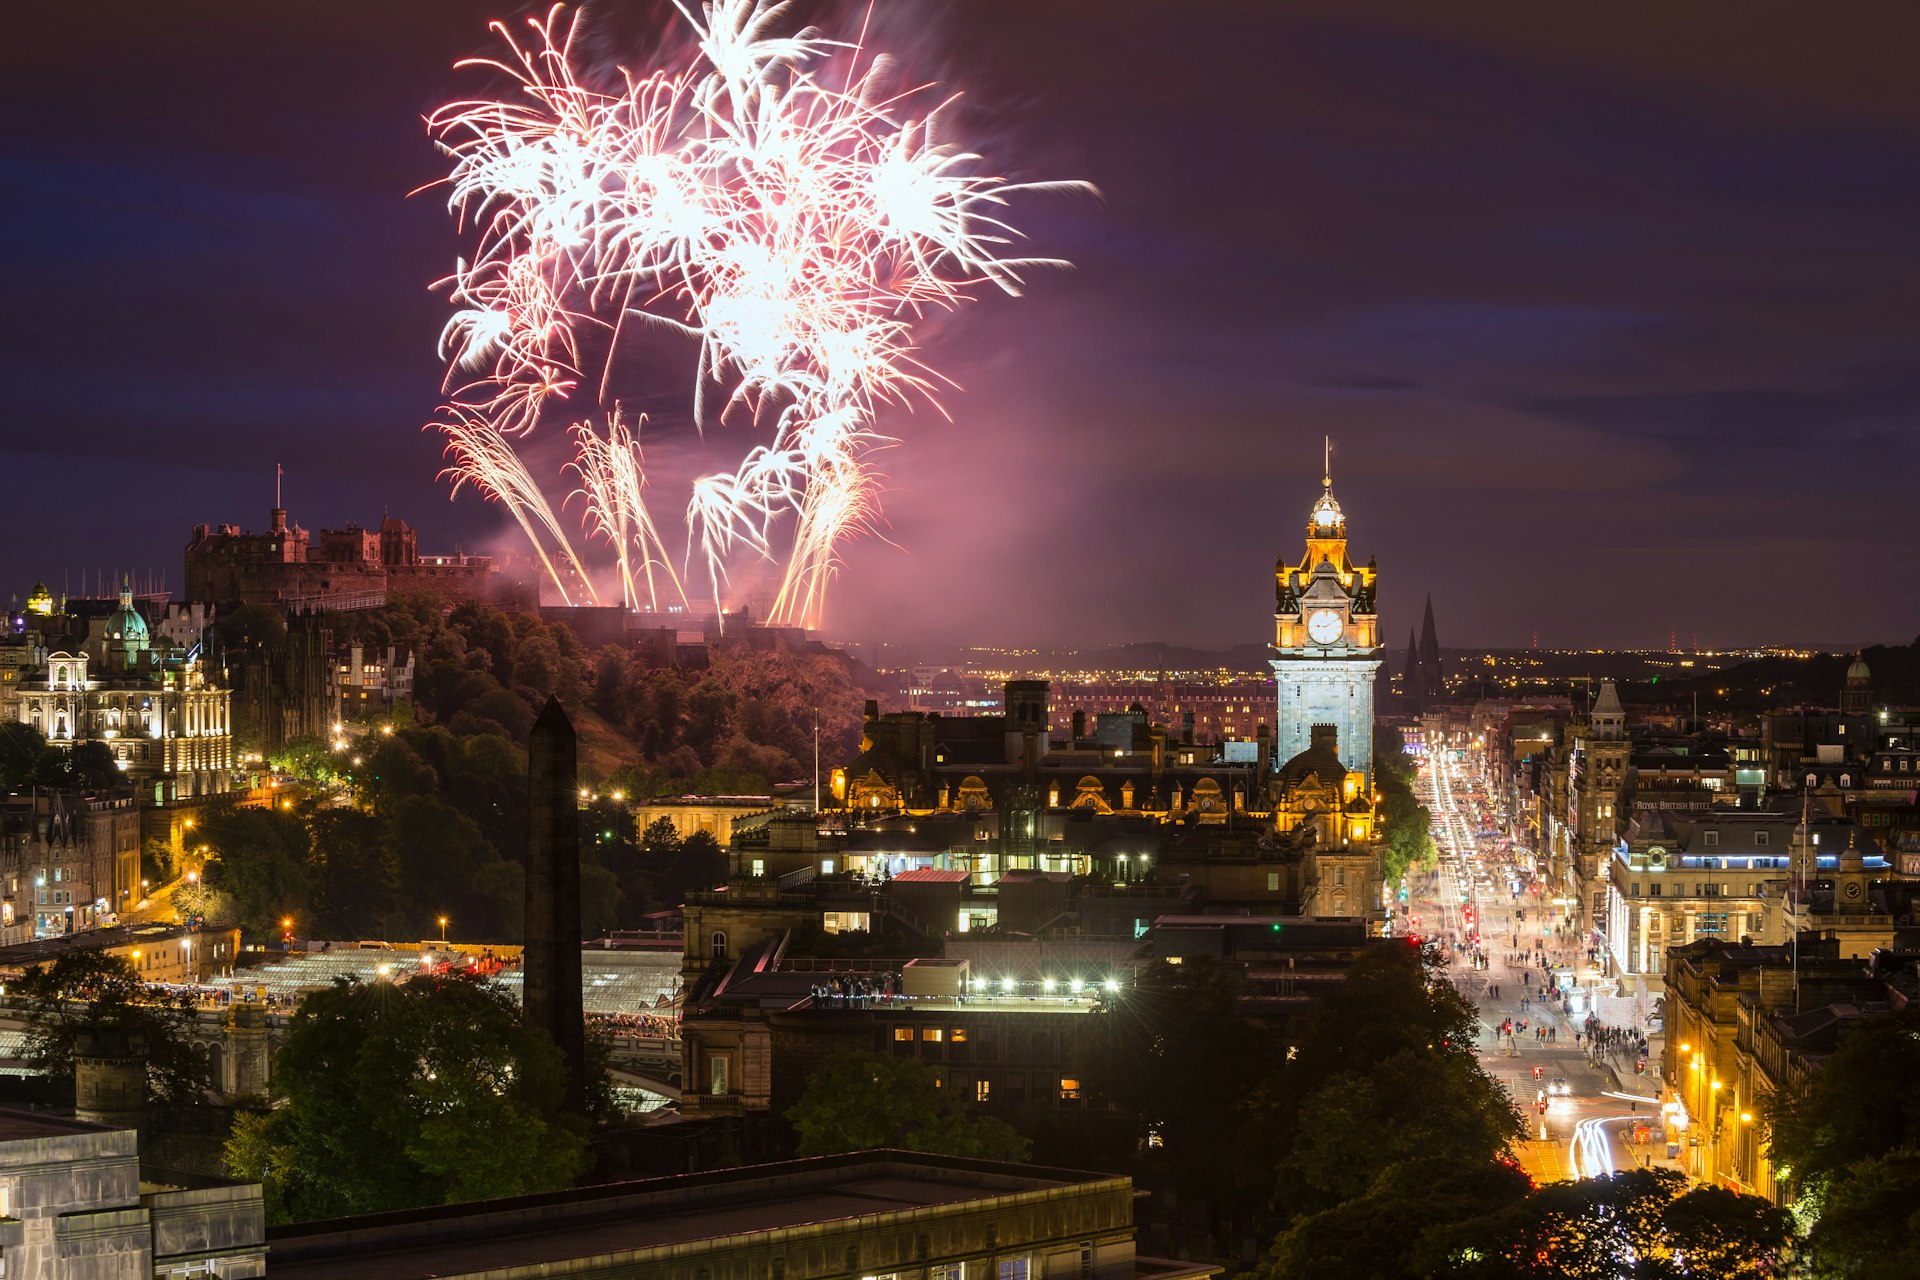 Fireworks over Edinburgh's Castle and Balmoral Clock Tower